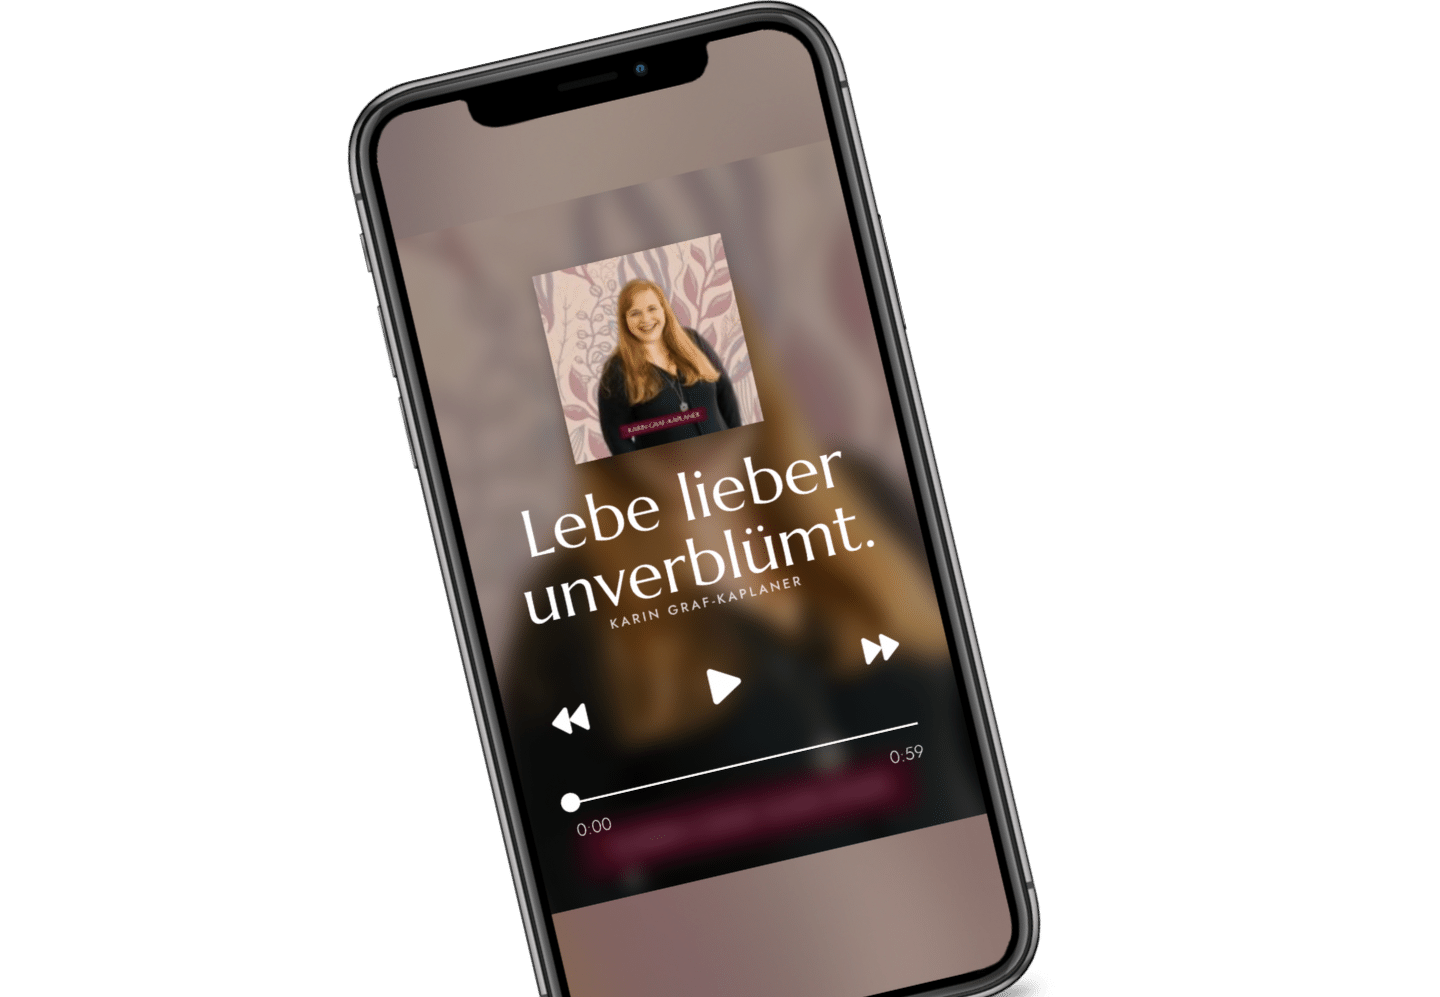 Lebe lieber unverblümt Podcast Karin Graf-Kaplaner